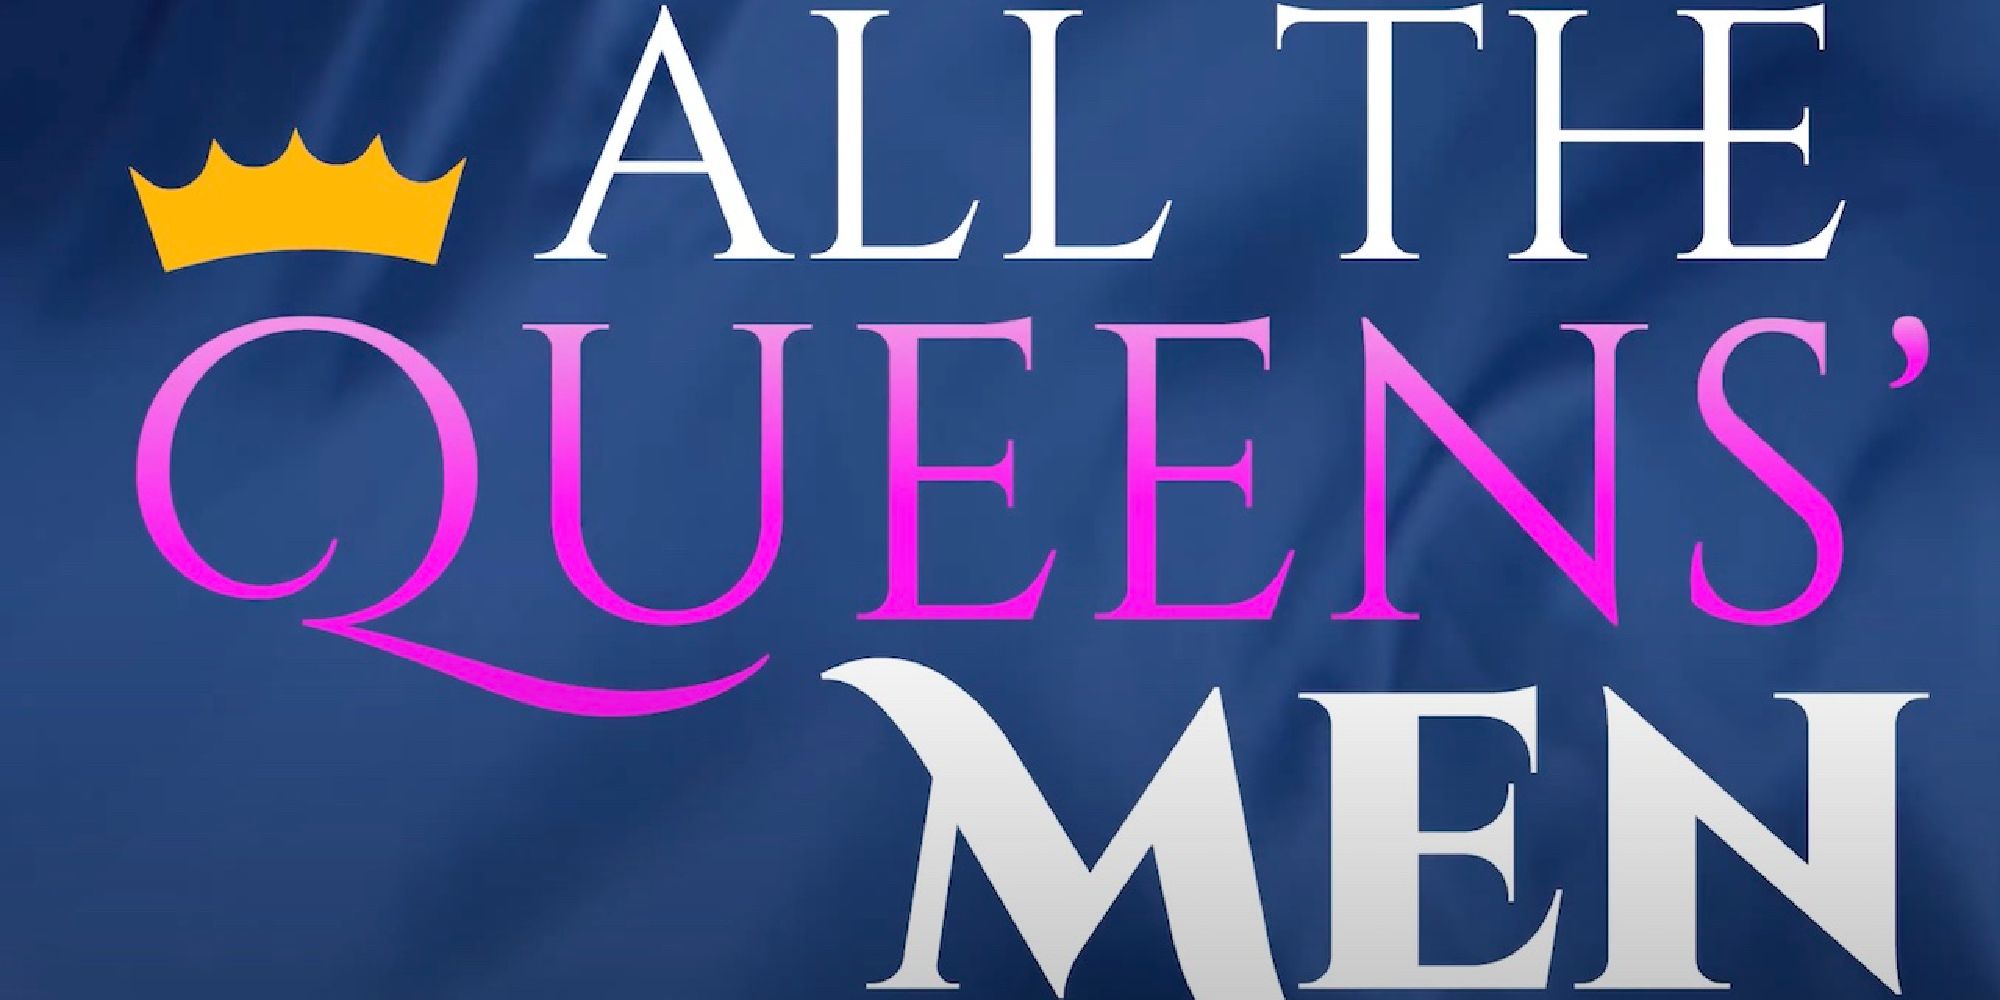 All The Queens Men logo